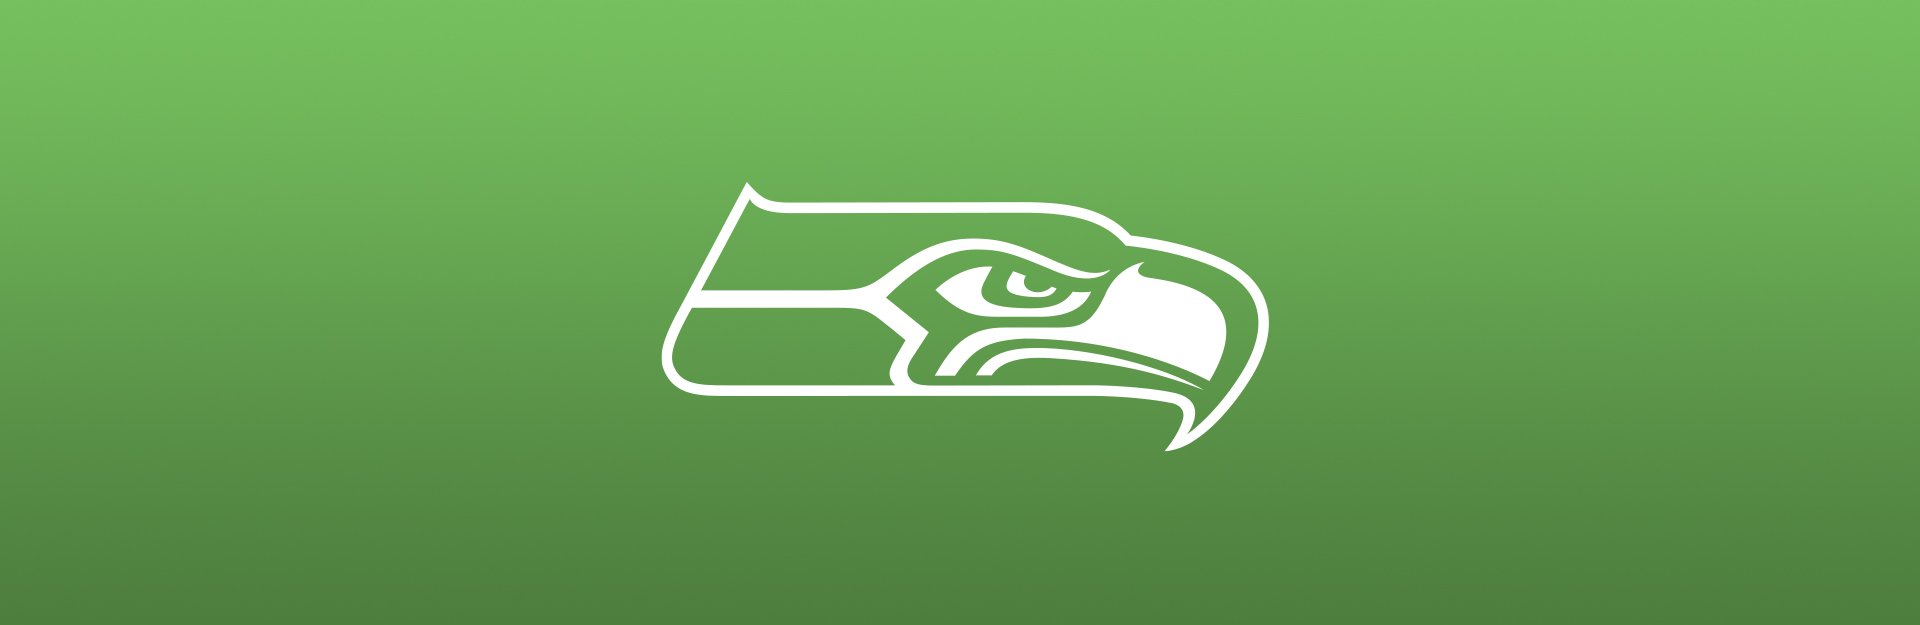 Seattle Seahawks logo overlaid on light green background